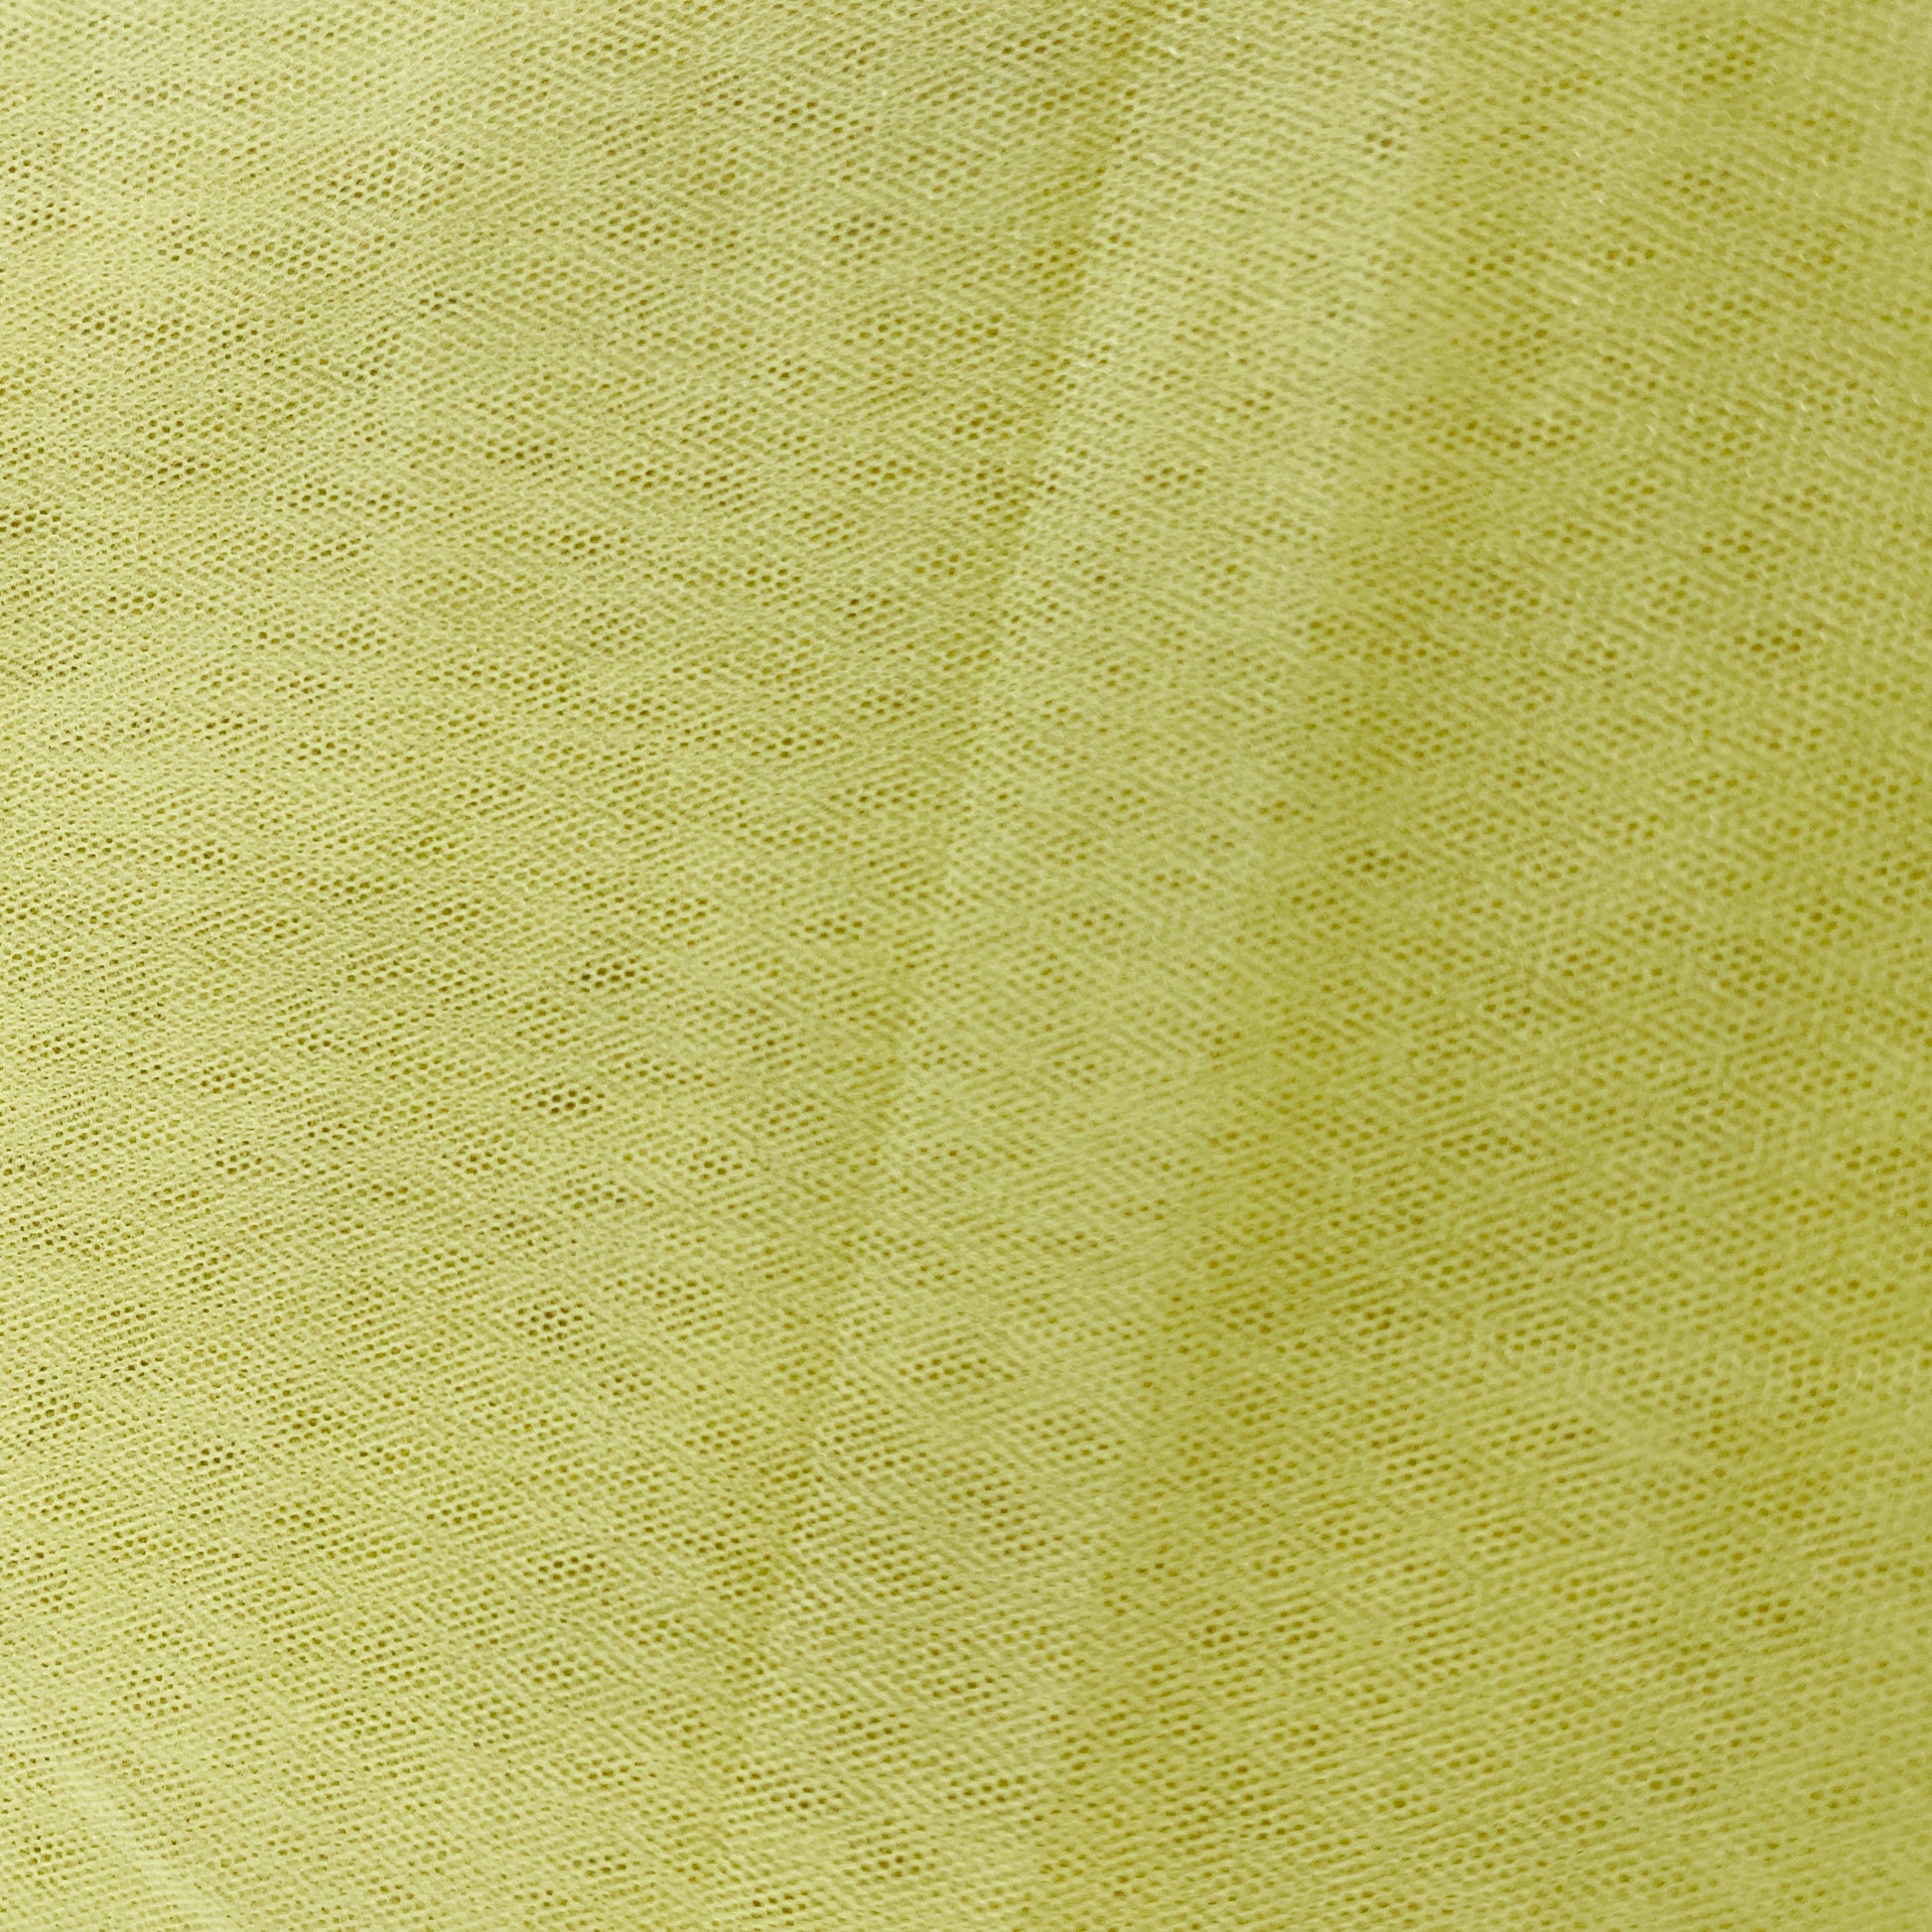 Lime Green Net Fabric - TradeUNO